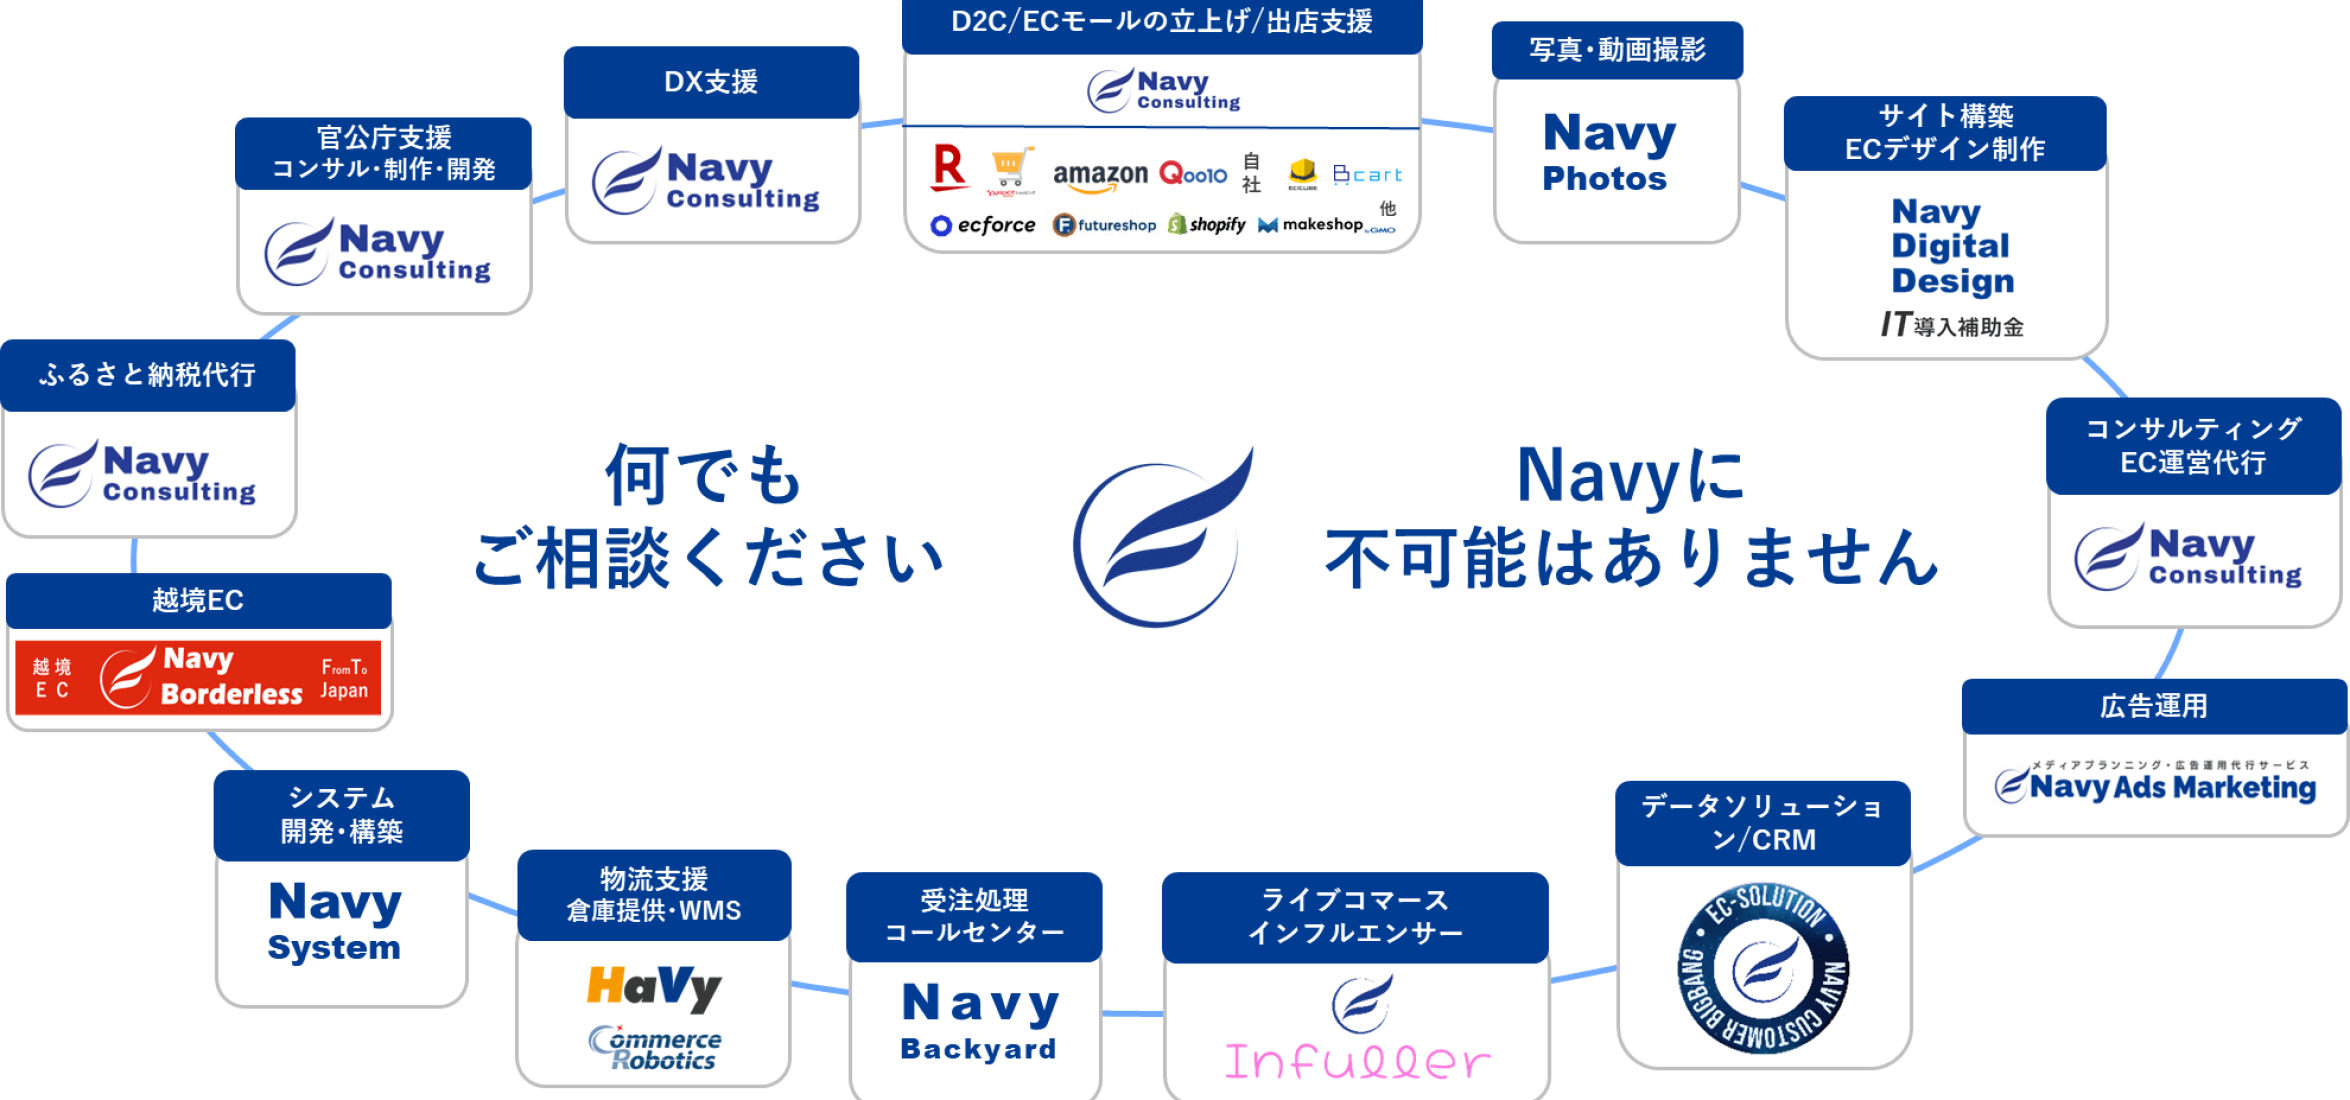 Navy-Circle